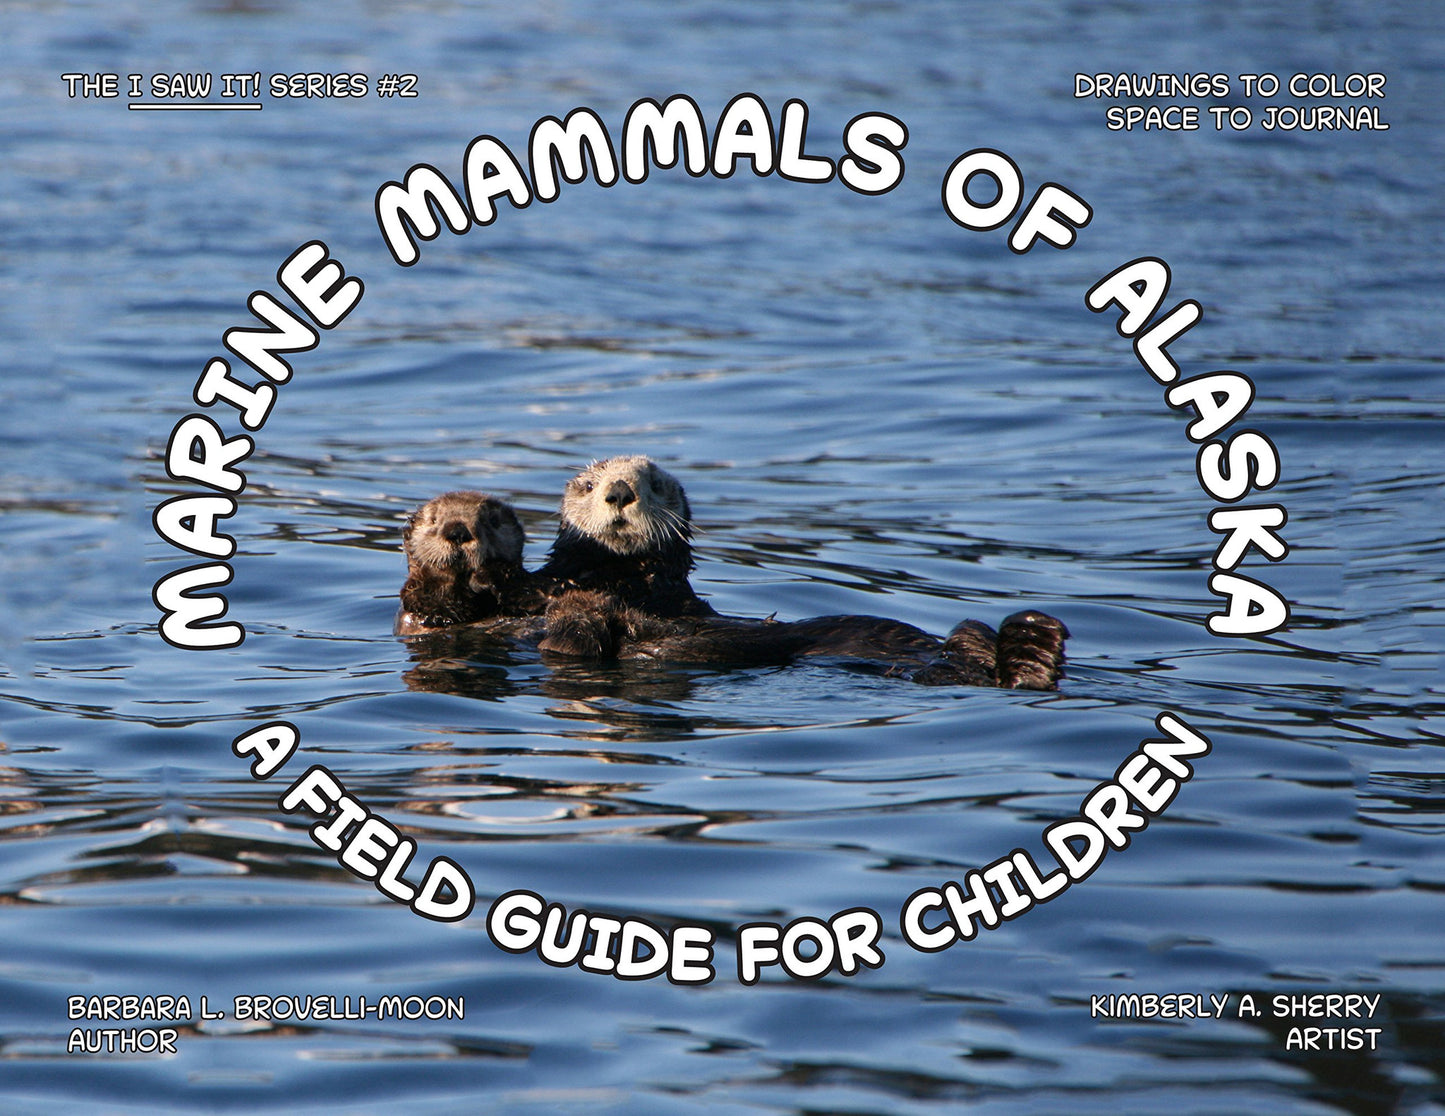 Marine Mammals of Alaska: A Field Guide for Children by Barbara L. Brovelli-Moon